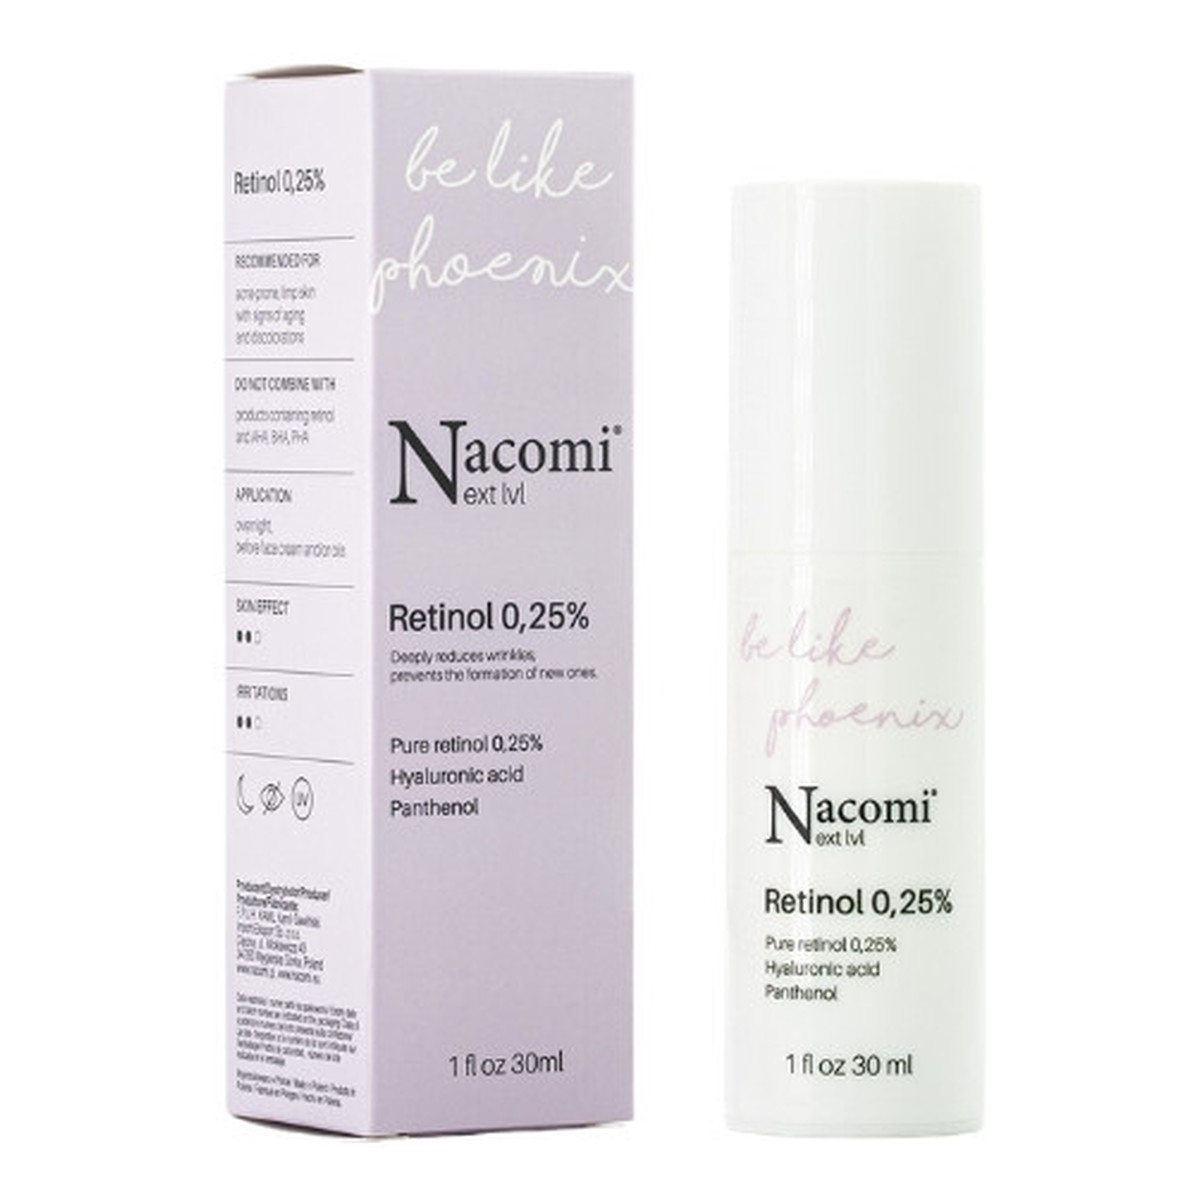 Nacomi Next Level Retinol 0.25% serum do twarzy 30ml